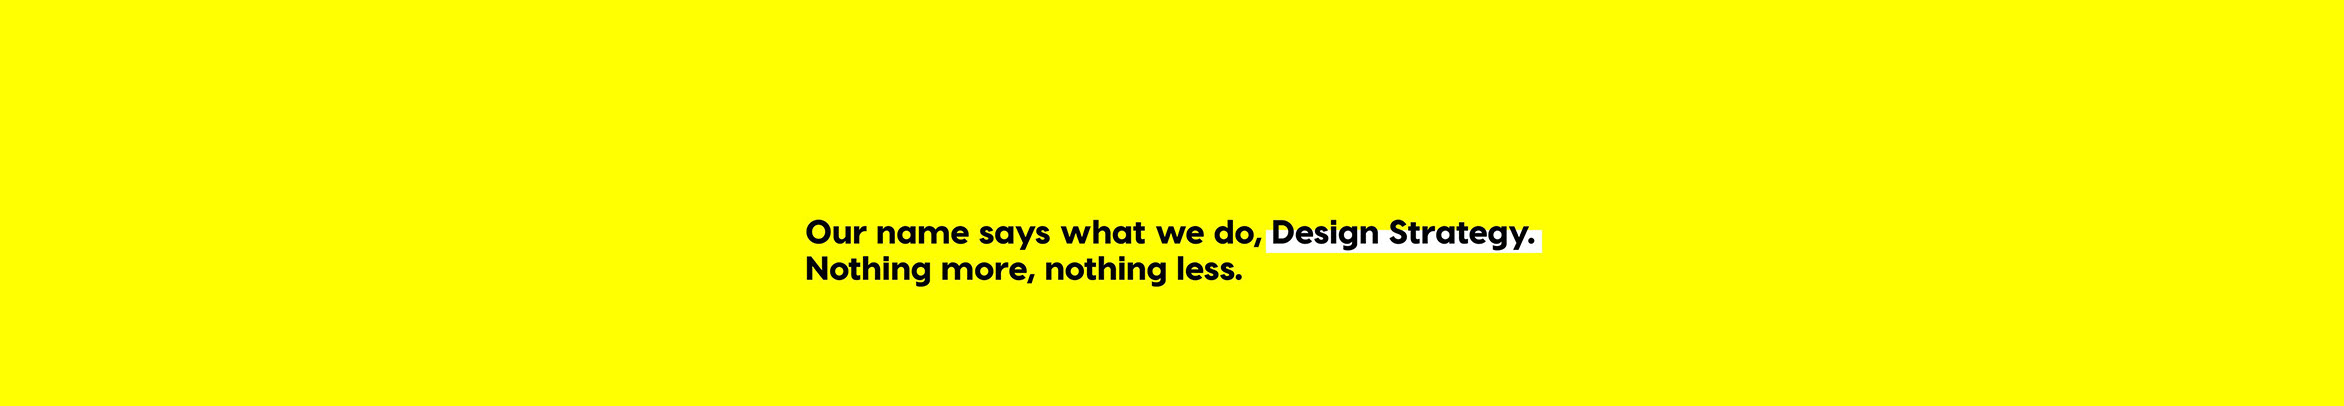 Minale Design Strategy's profile banner